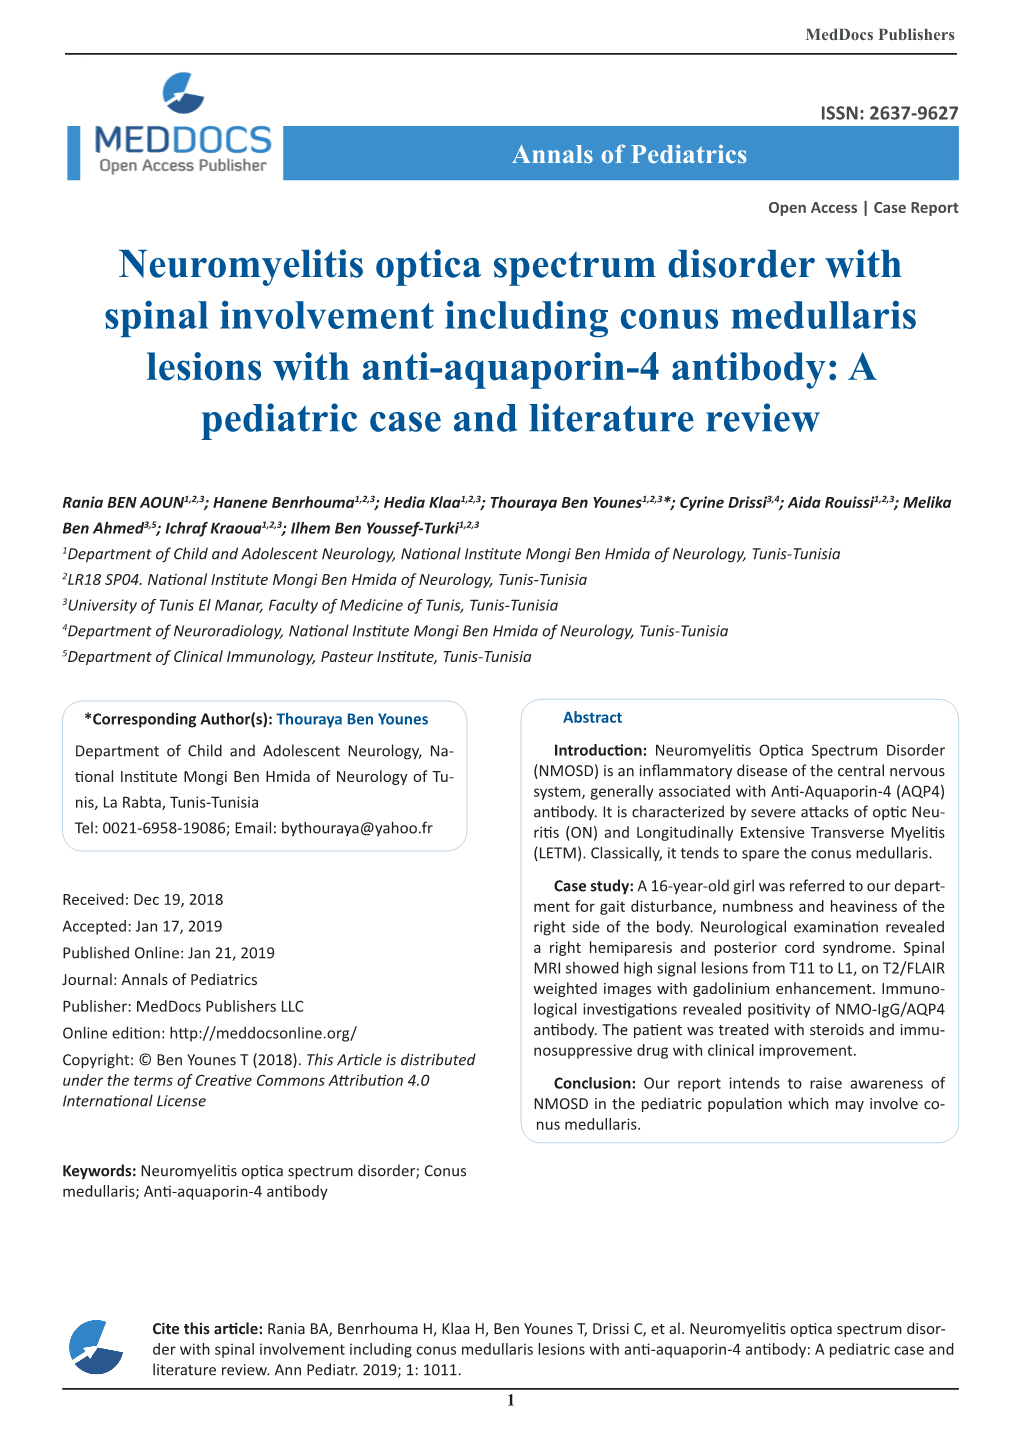 Neuromyelitis Optica Spectrum Disorder with Spinal Involvement